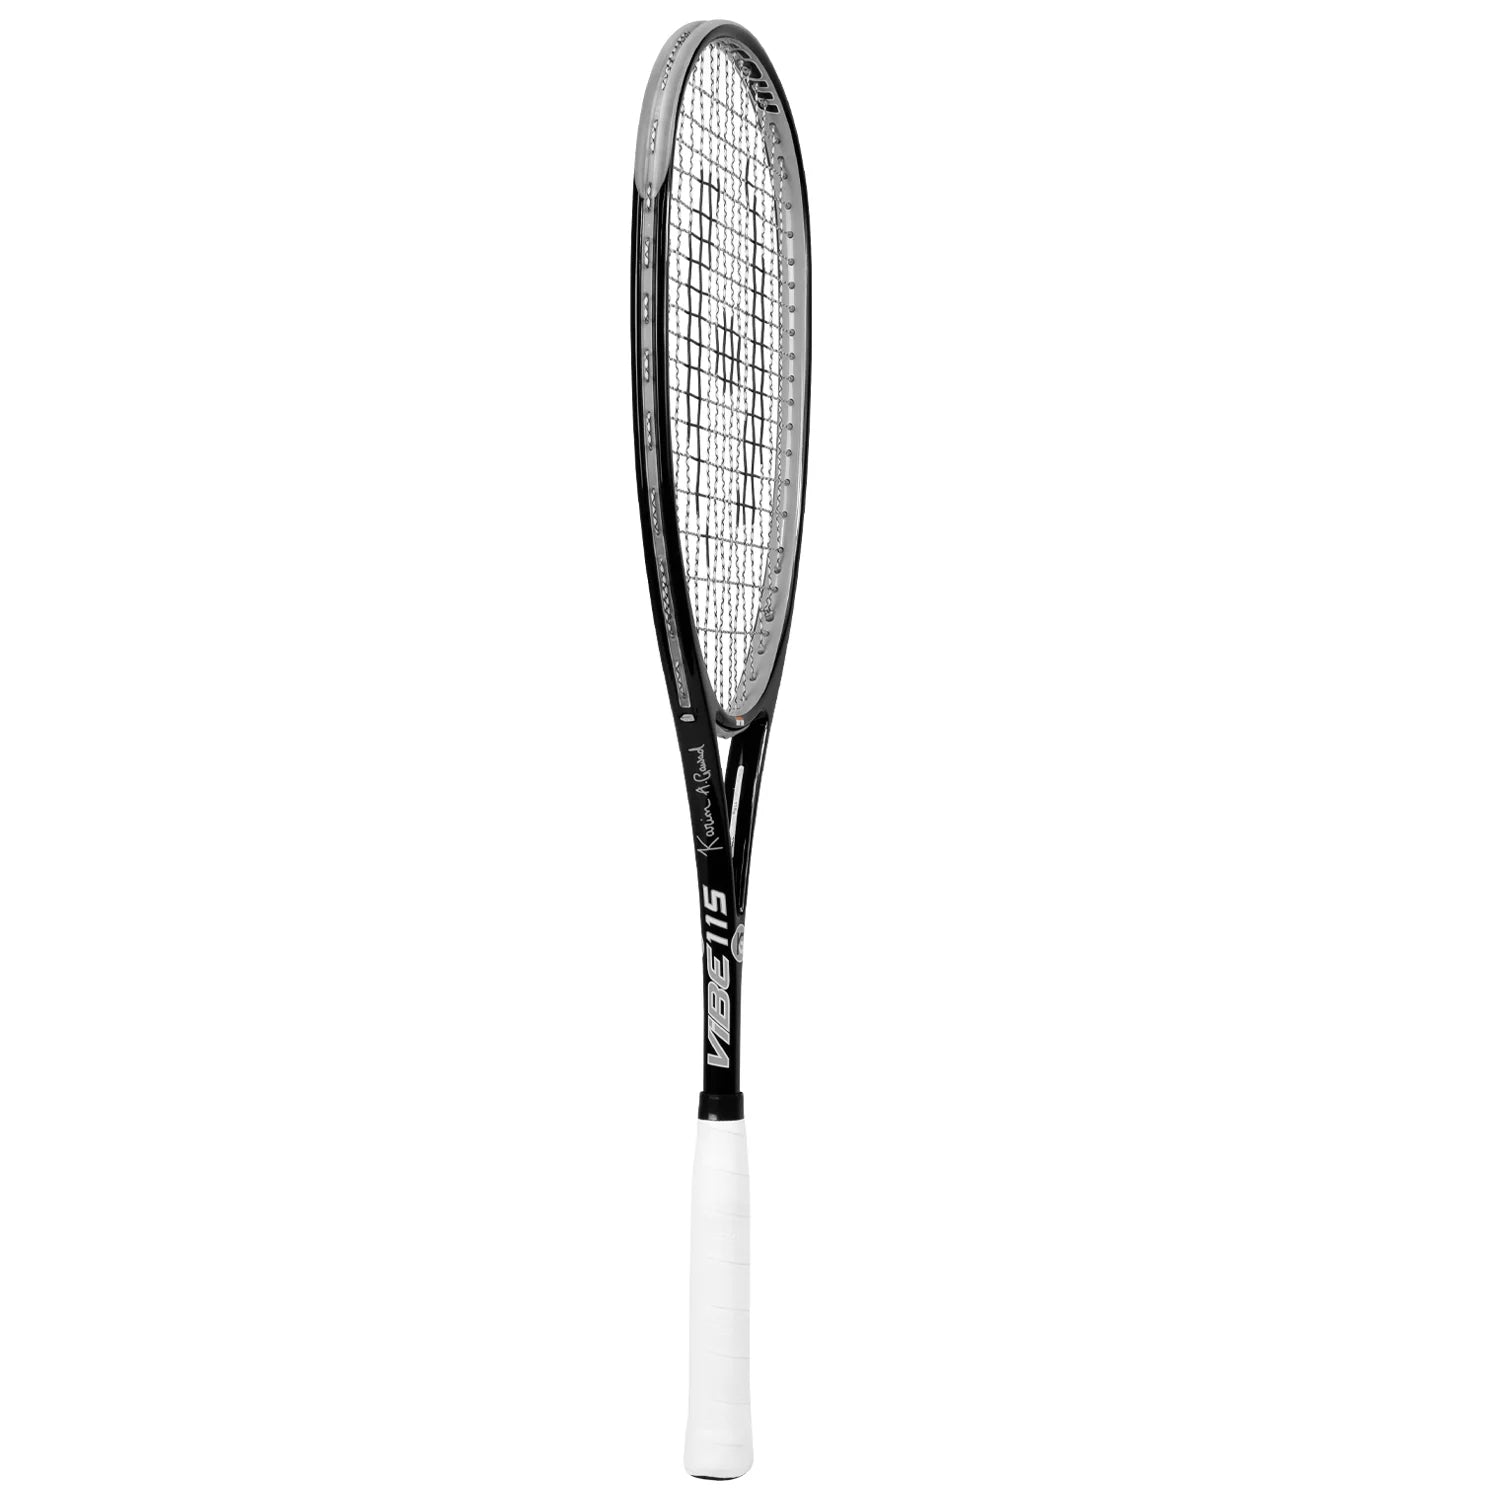 Harrow Vibe 115 Karim Abdel Gawad Signature Squash Racquet